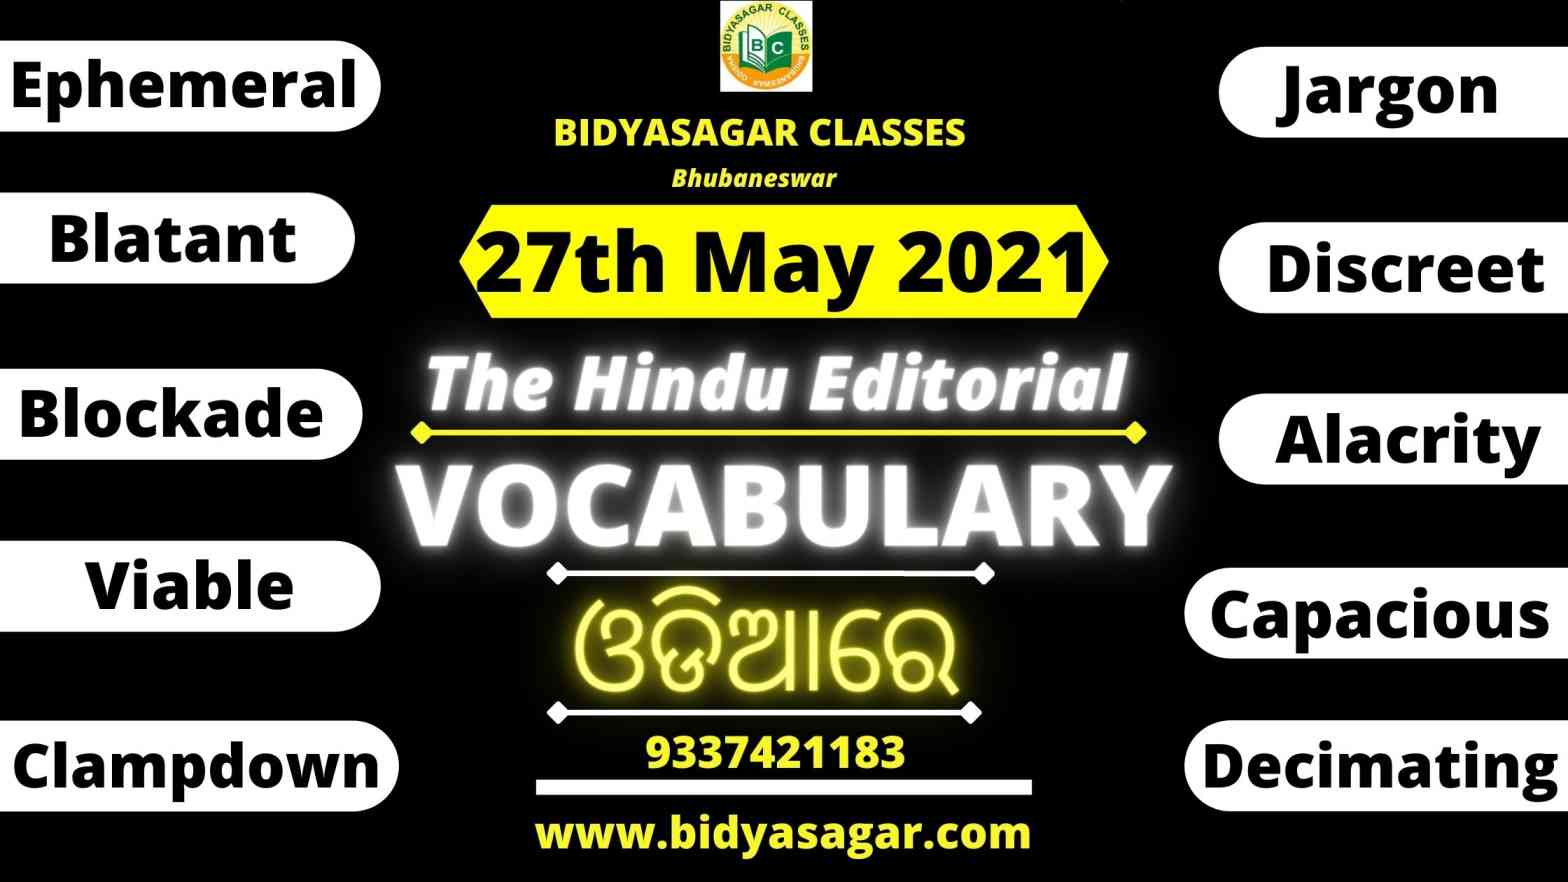 The Hindu Editorial Vocabulary of 27th May 2021